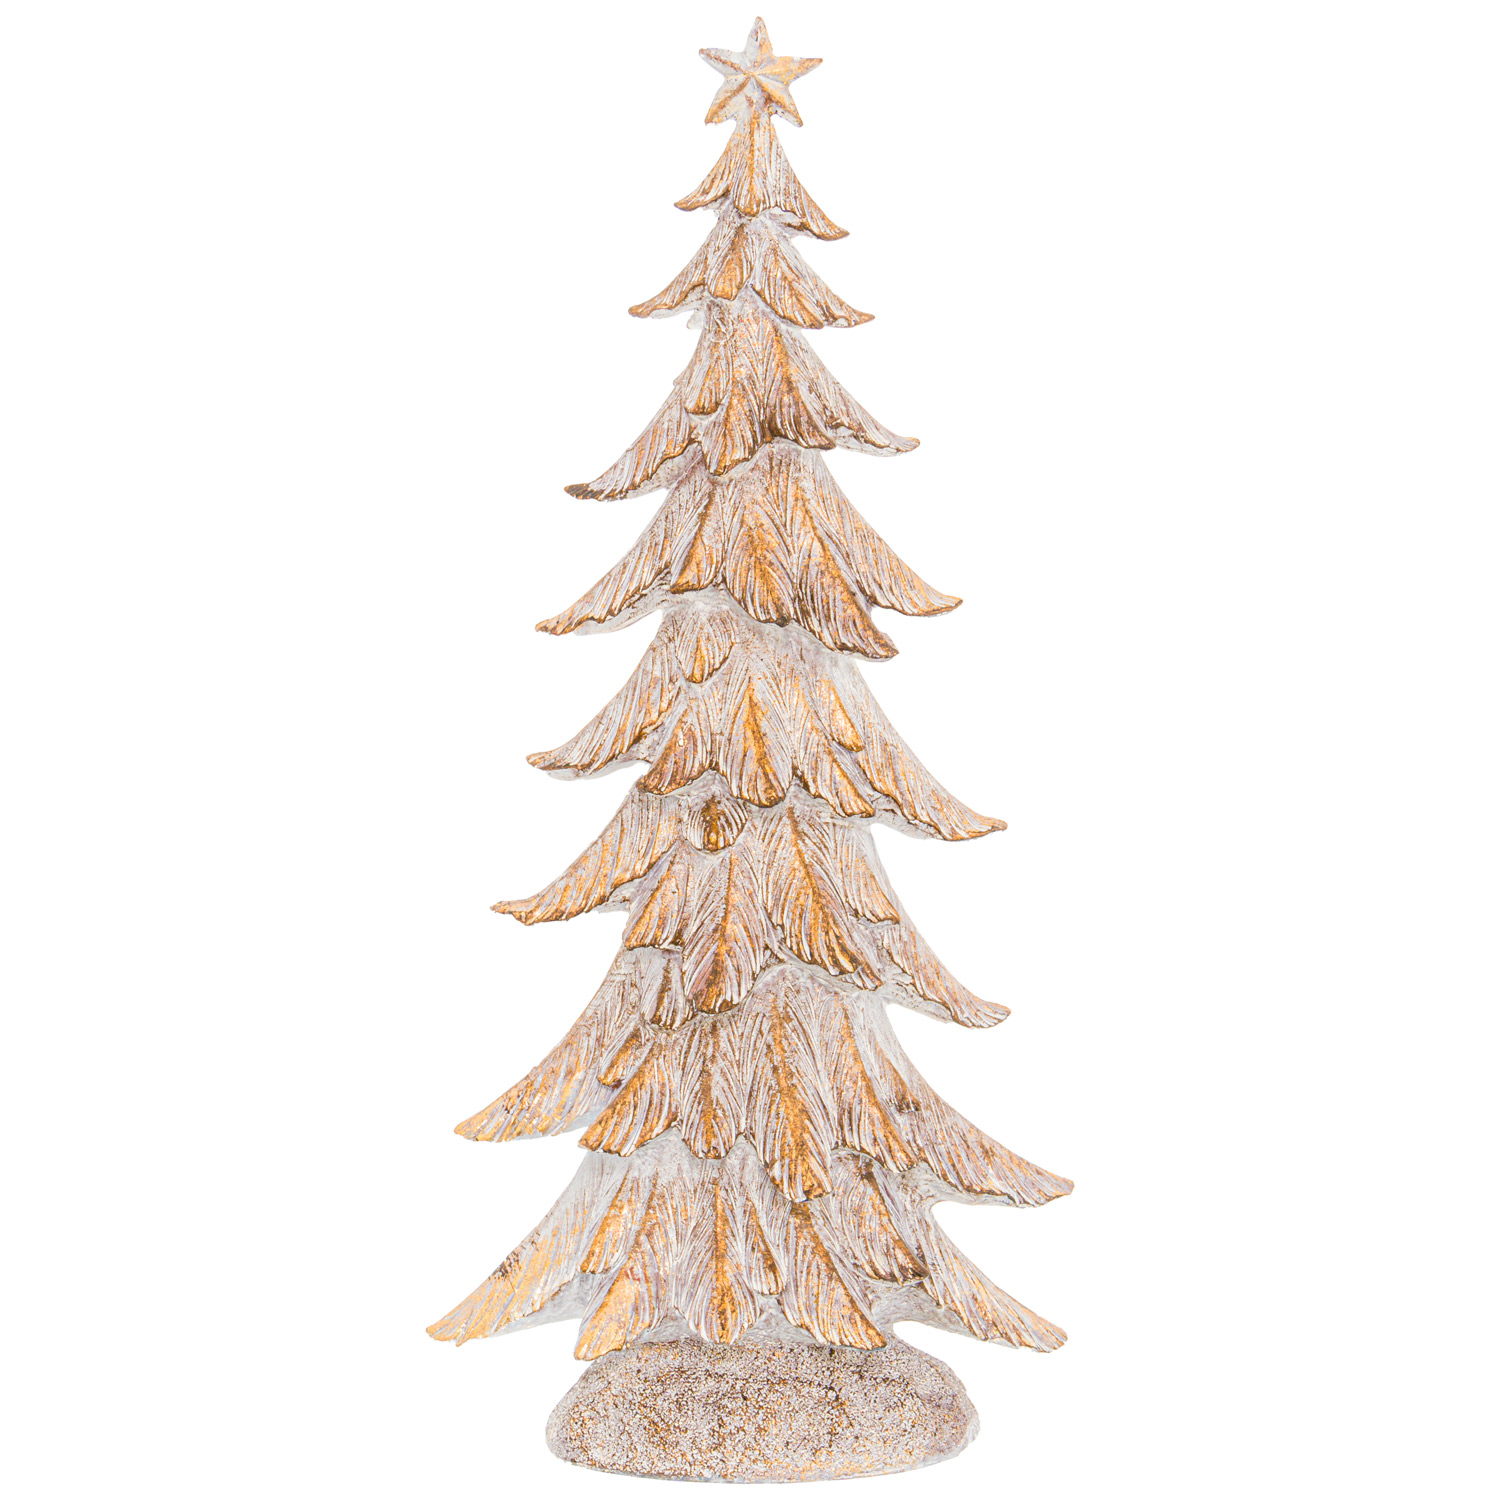 Tall Gold Christmas Tree Ornament - Image 1